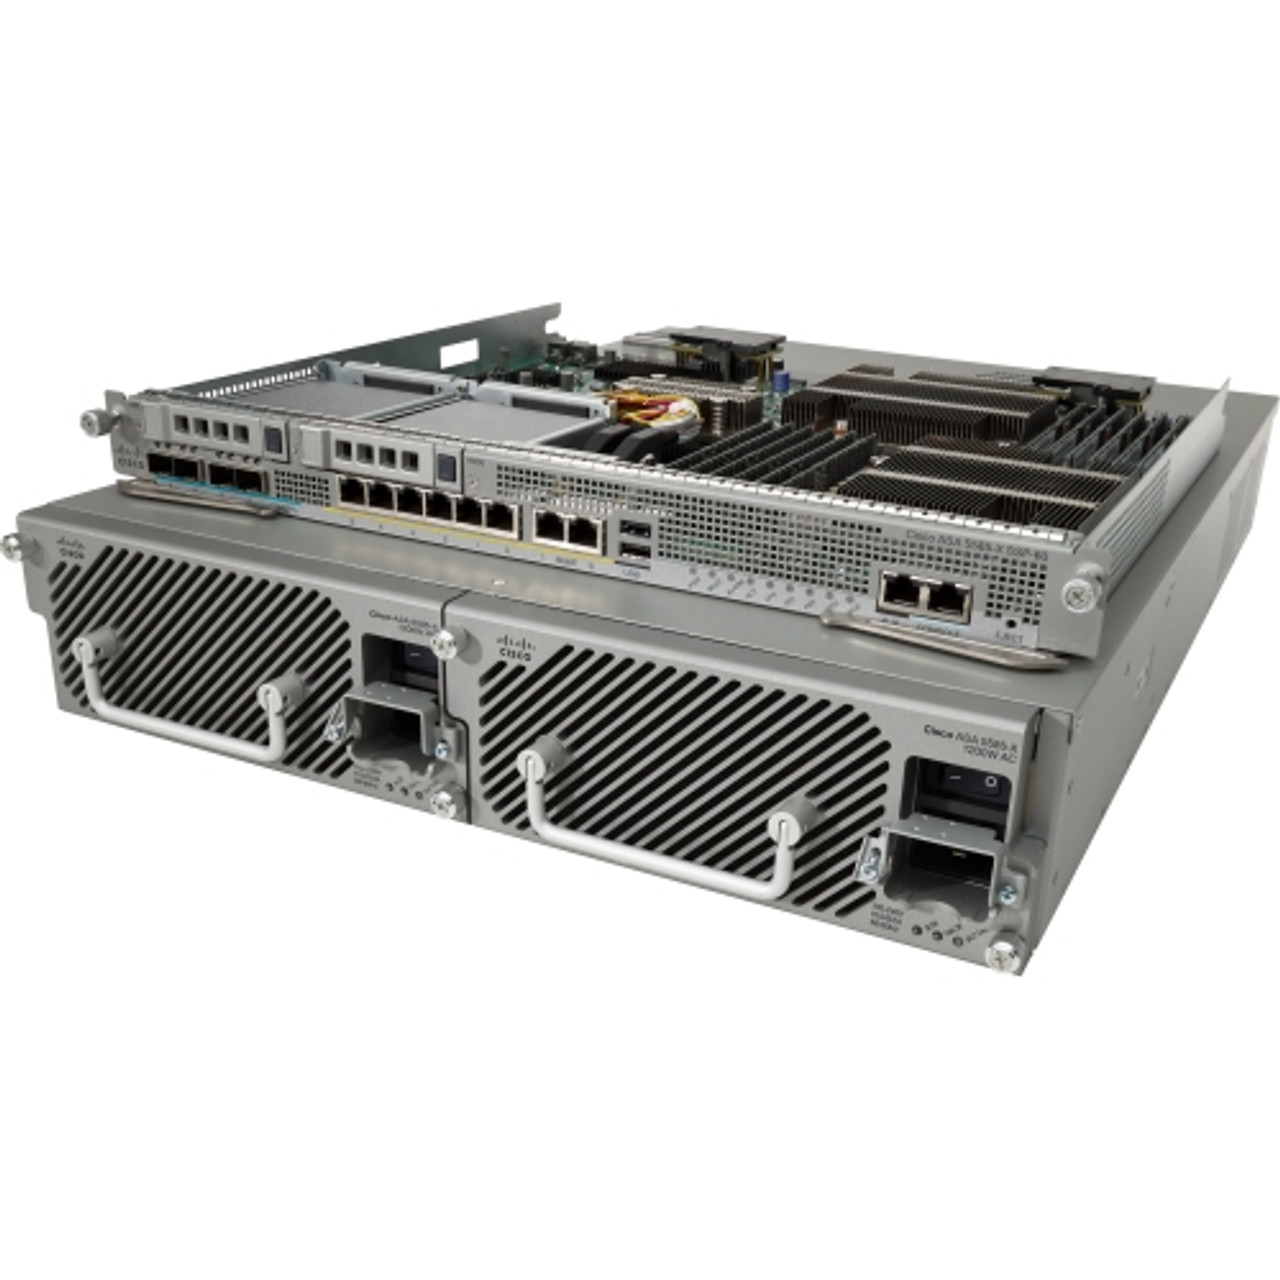 ASA5585-S20F20-K9 Cisco ASA 5585-X Network Security/Firewall Appliance (Refurbished)